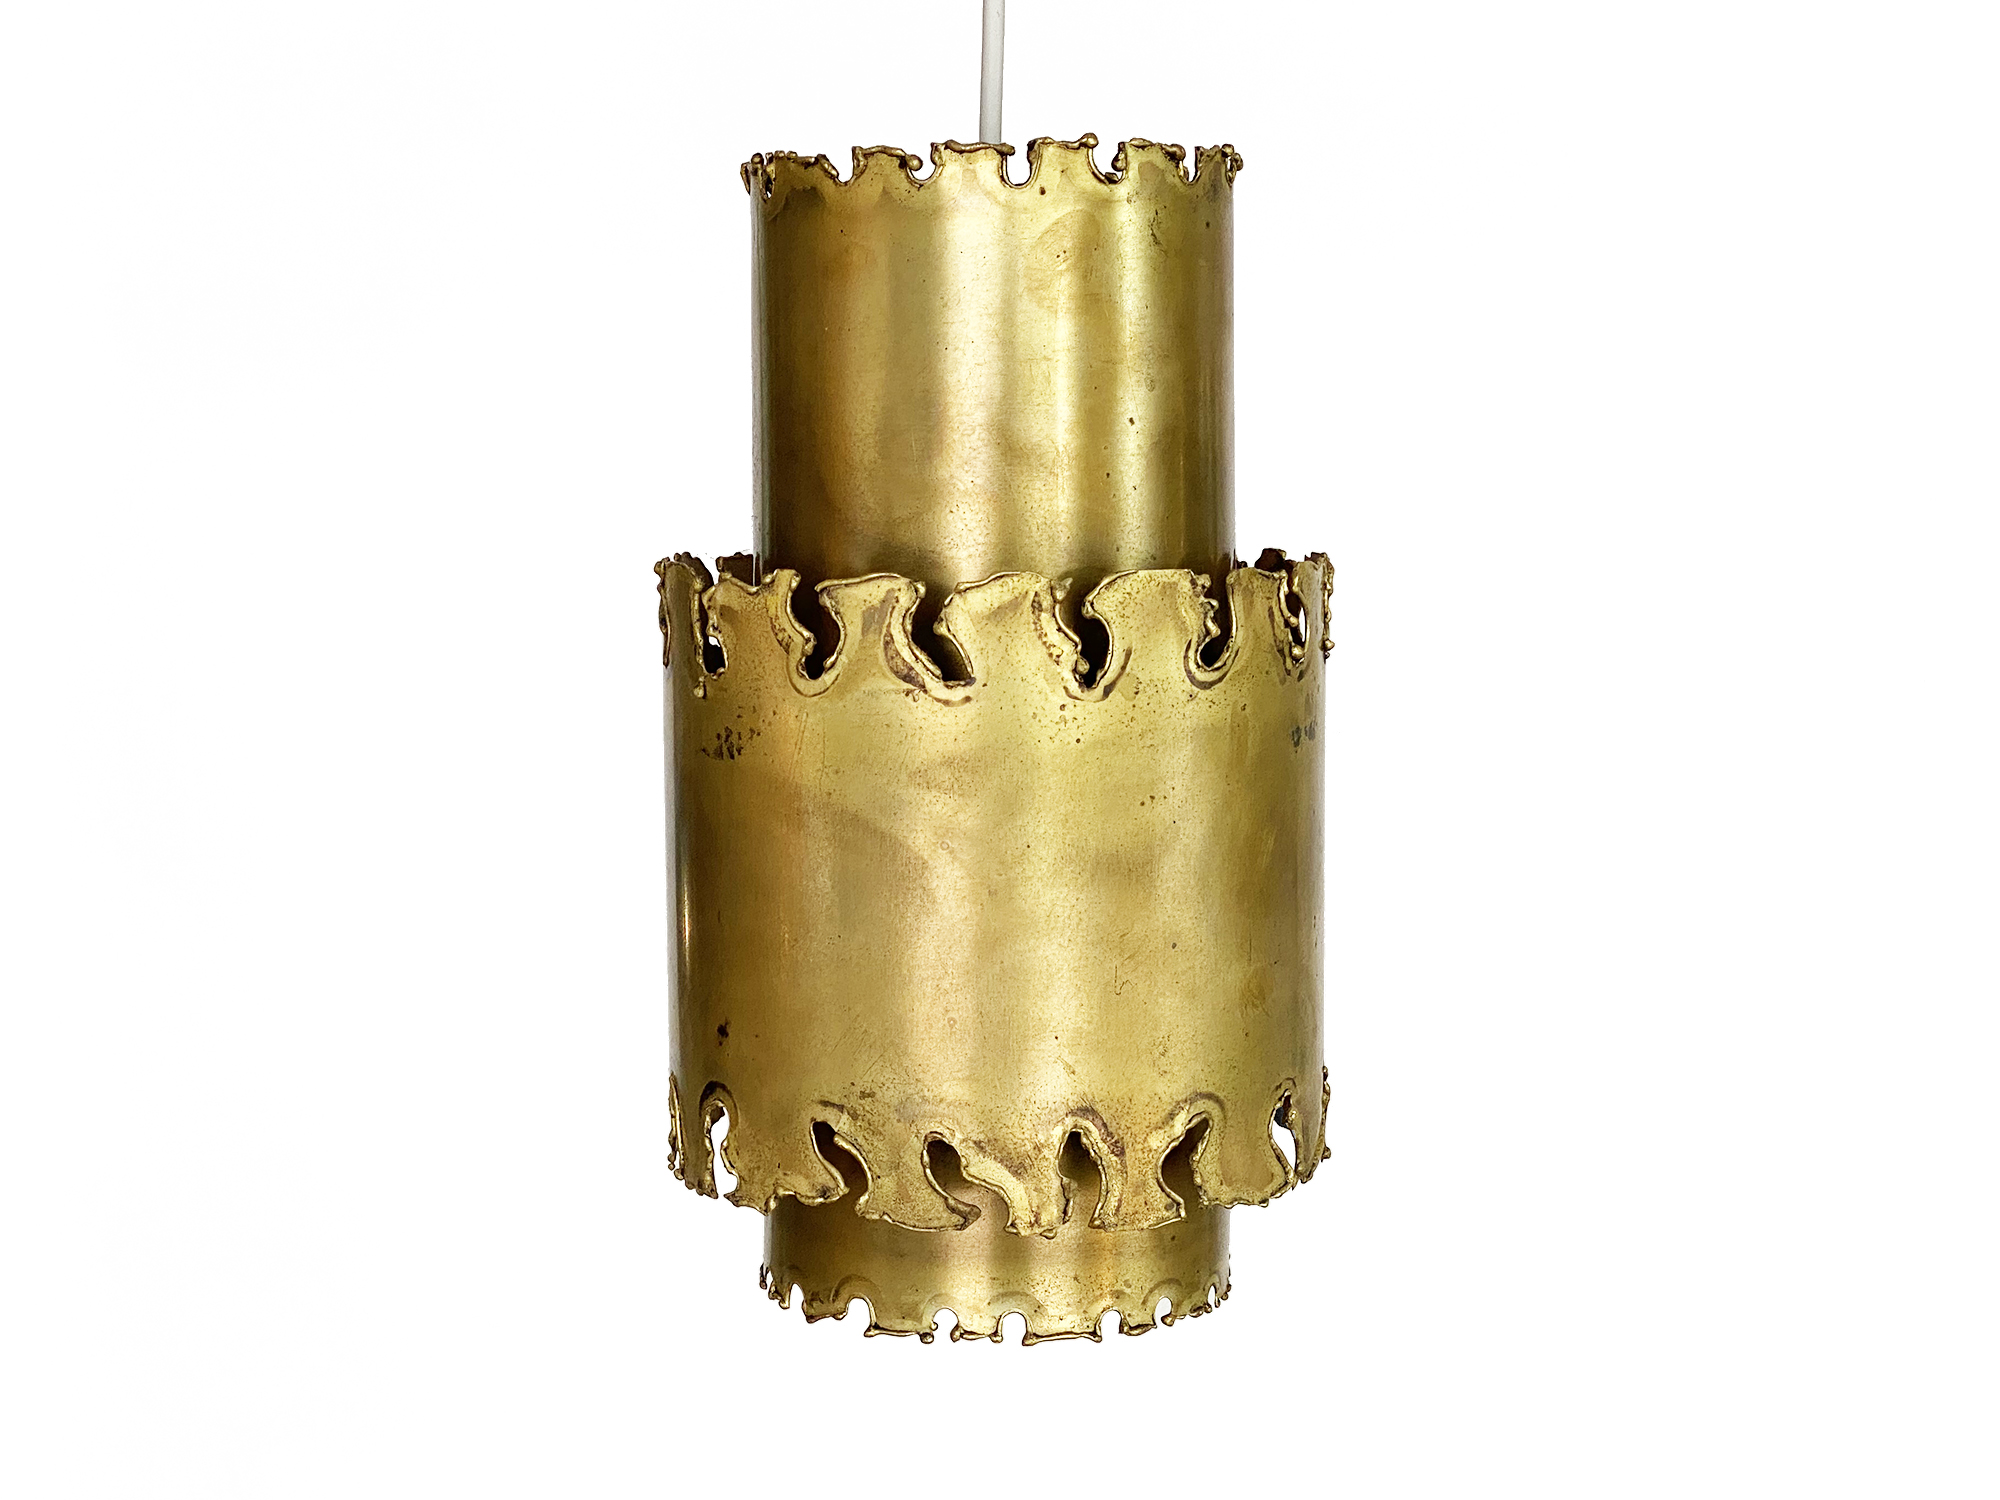 Brutalist pendant light in oxidized brass by Svend Aage Holm Sørensen for Holm Sørensen & co. Denmark 1960s